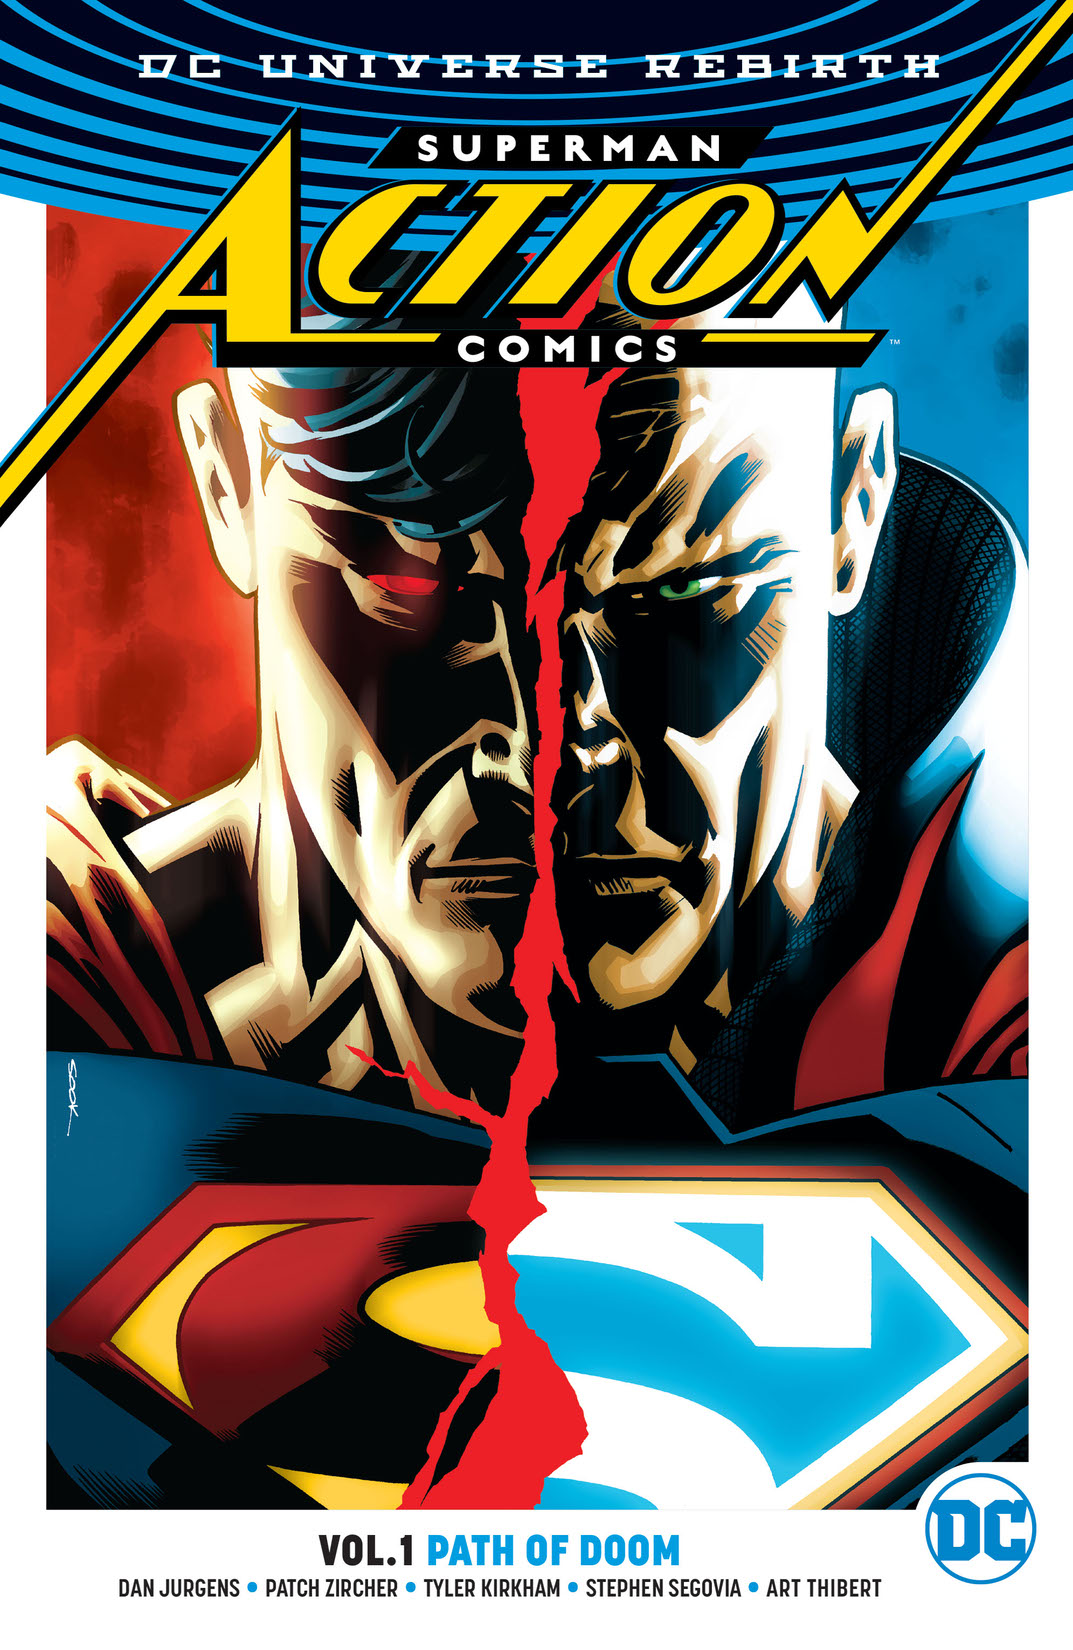 Superman - Action Comics Vol. 1: Path of Doom preview images